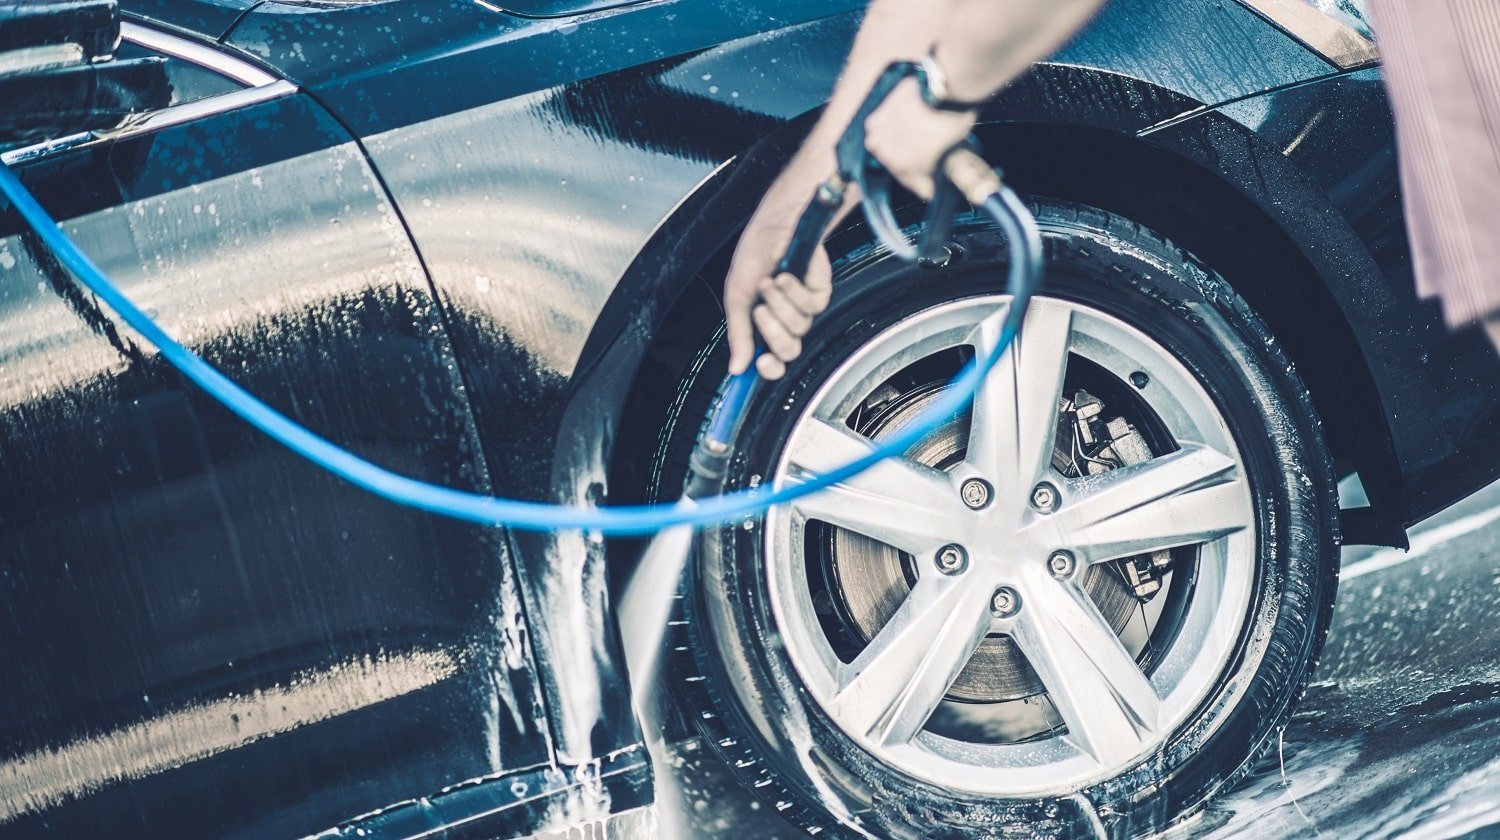 Self Car Washing. Cleaning Wheels Using High Pressure Water.